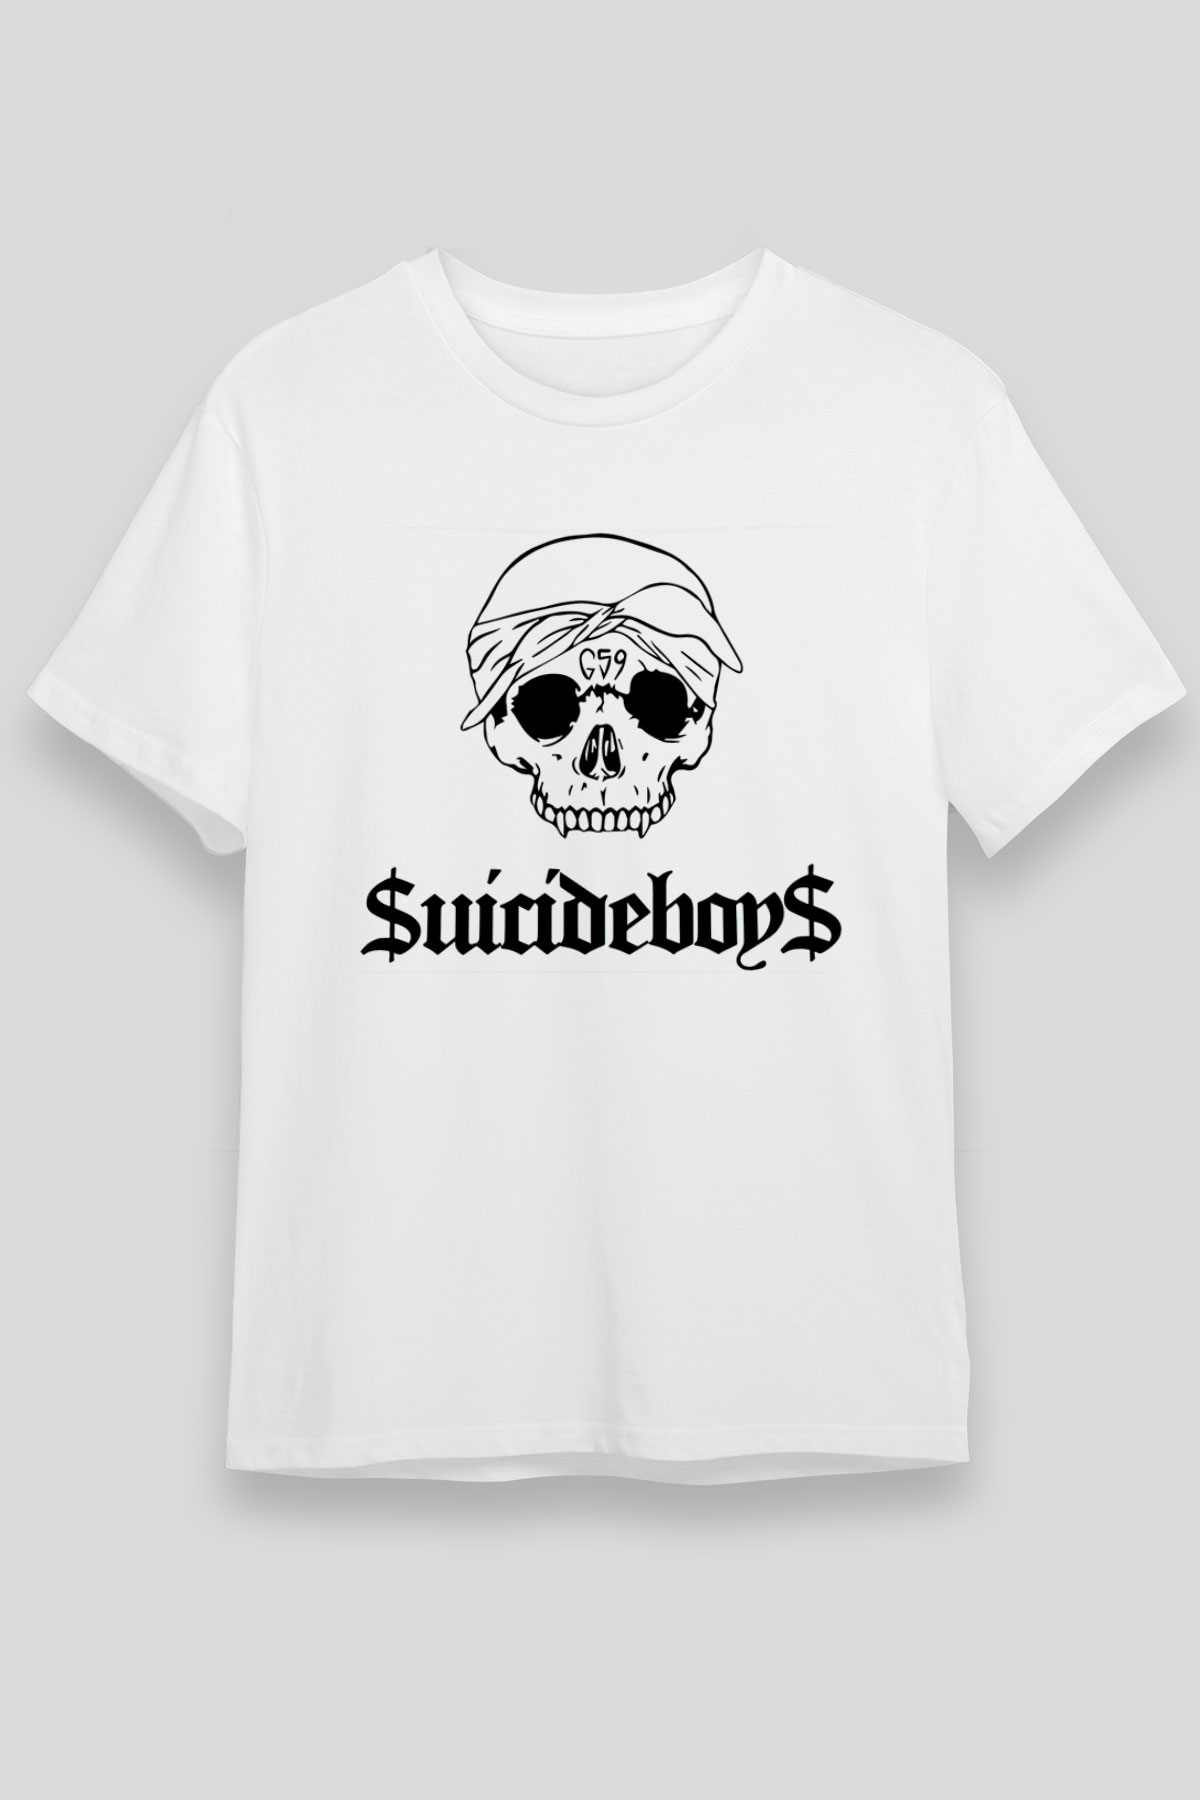 Suicideboys T shirt,Hip Hop,Rap Tshirt 03